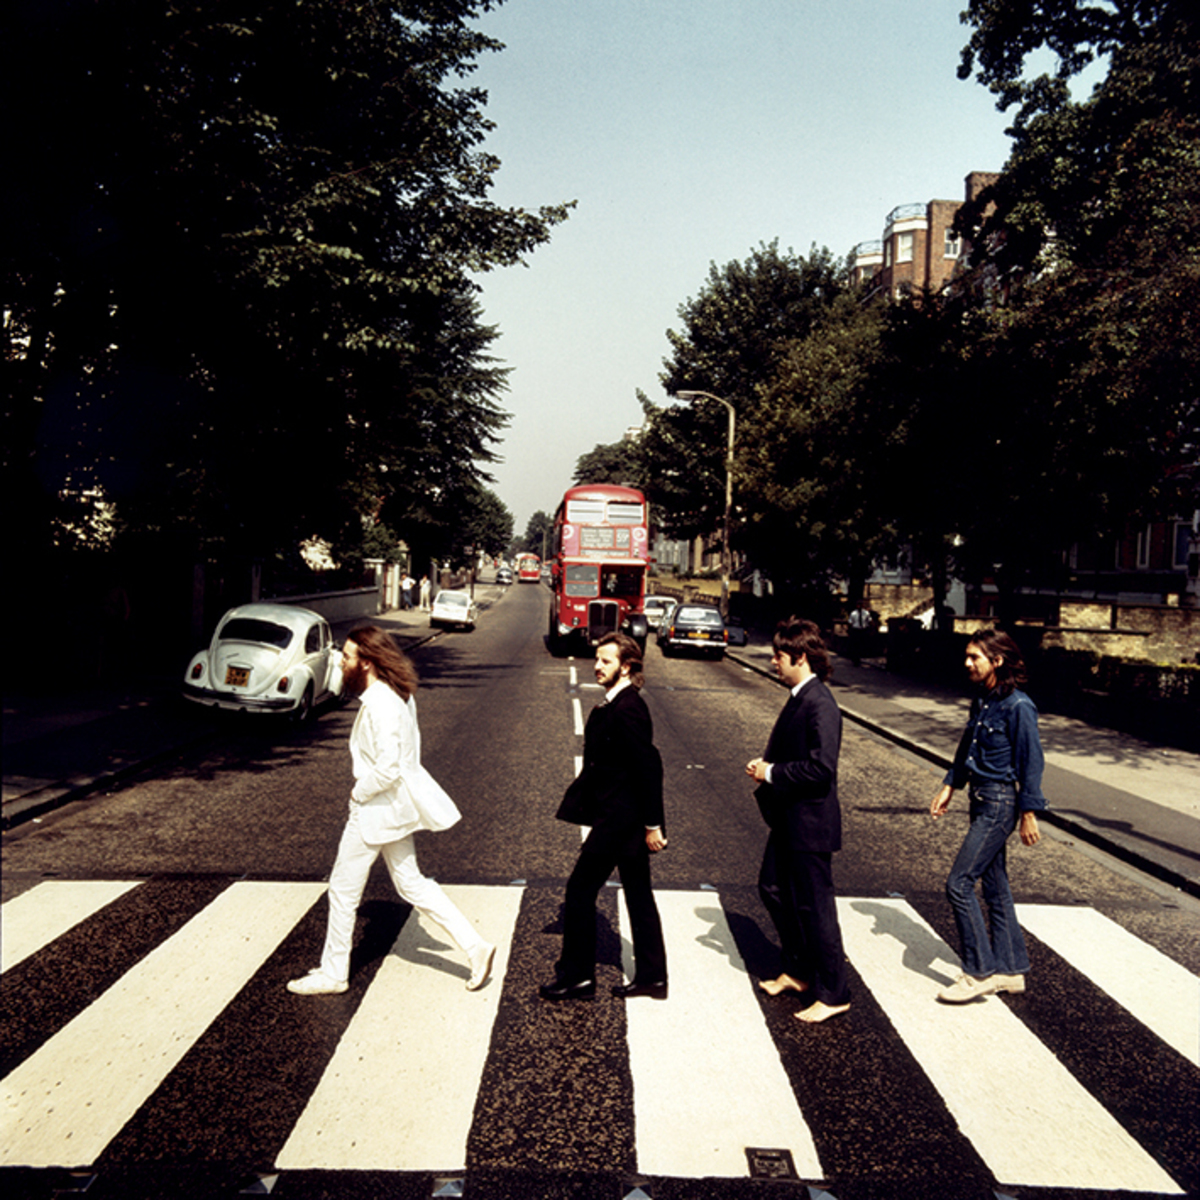 The Beatles – The Abbey Road Set  “Frame 4” by Iain Macmillan